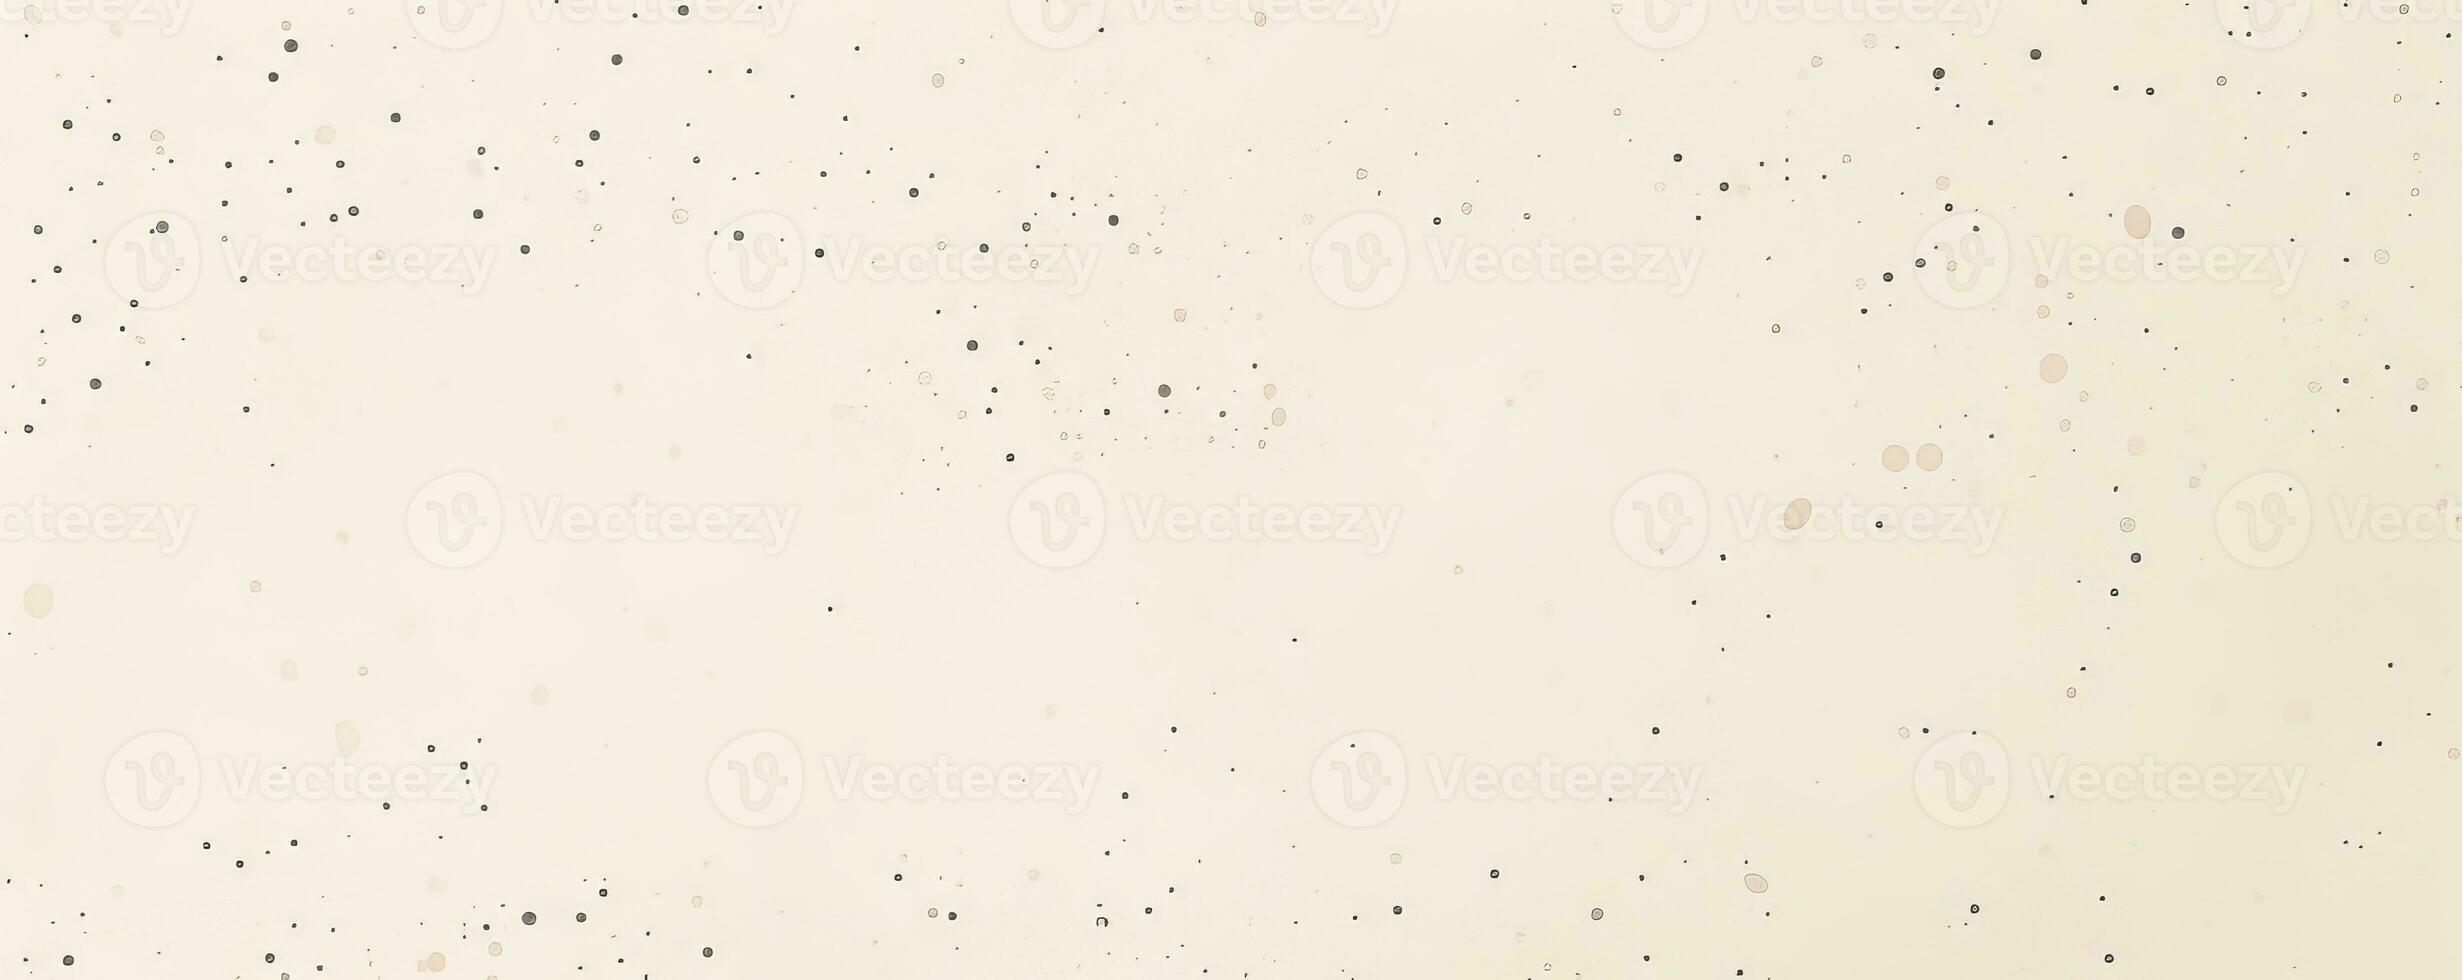 Spray Speckle Texture and Grunge Splash Effect on Dirty Grain Background photo